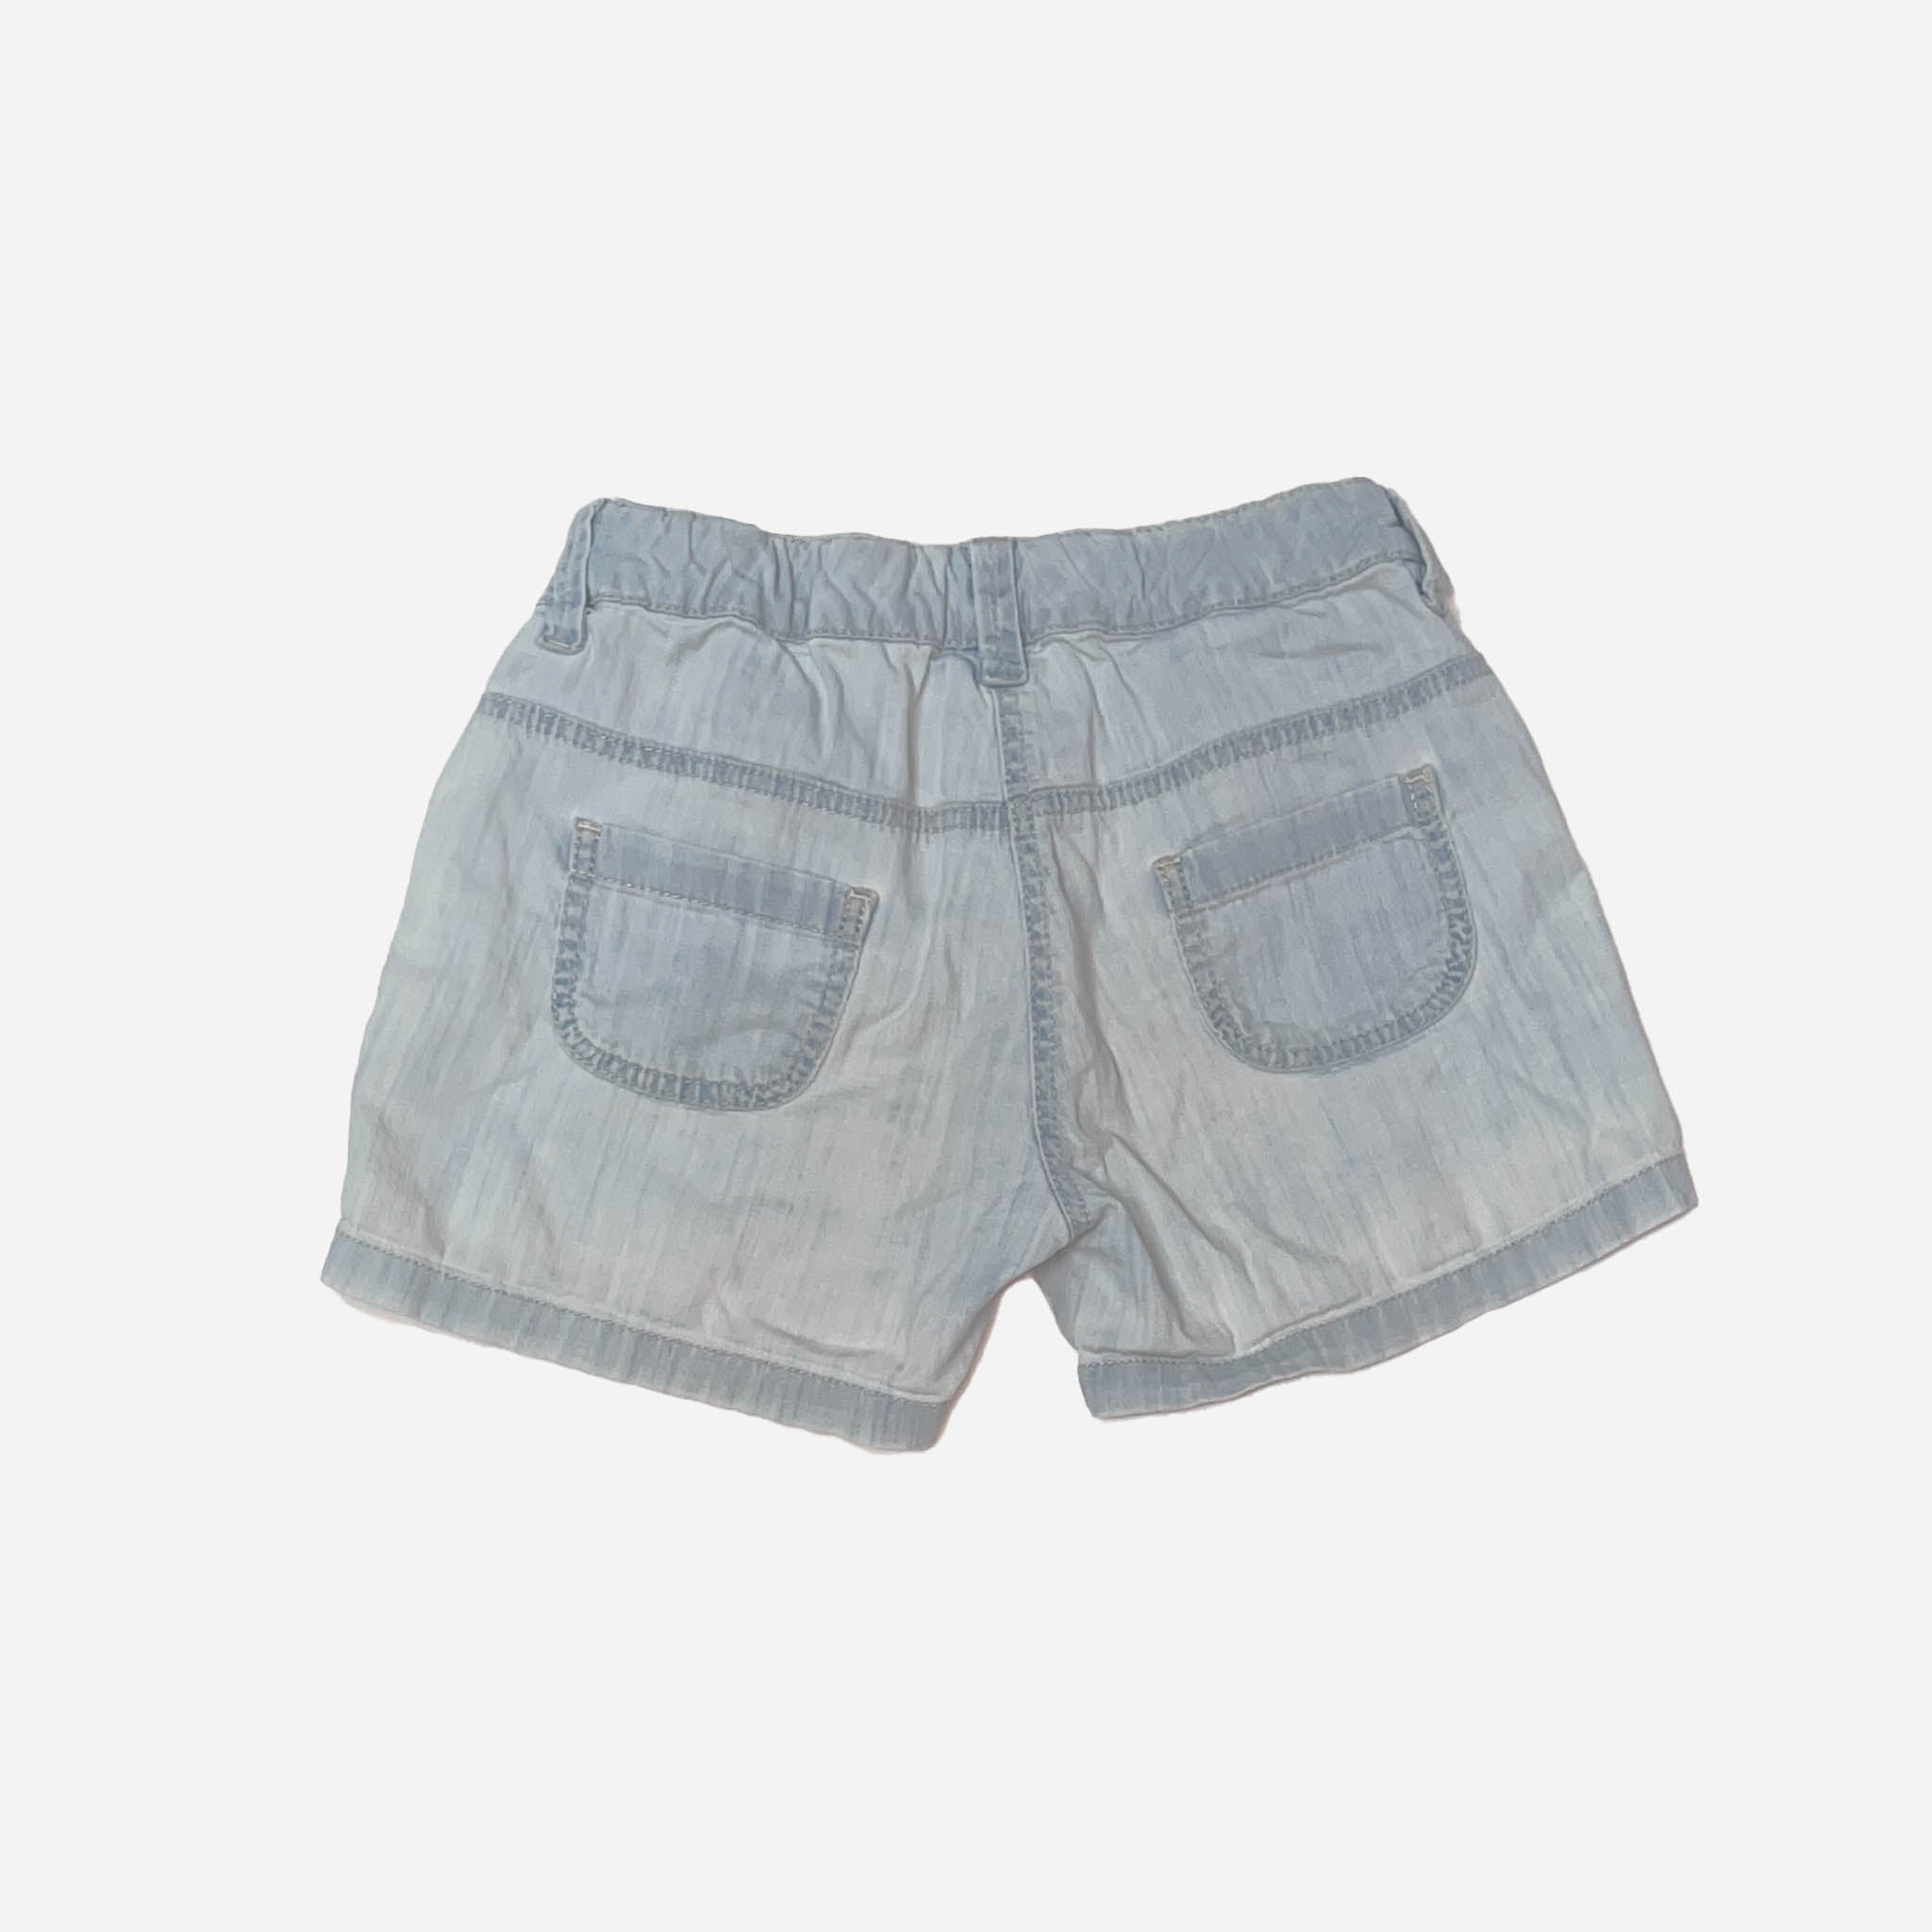 Designer Denim Shorts - 5